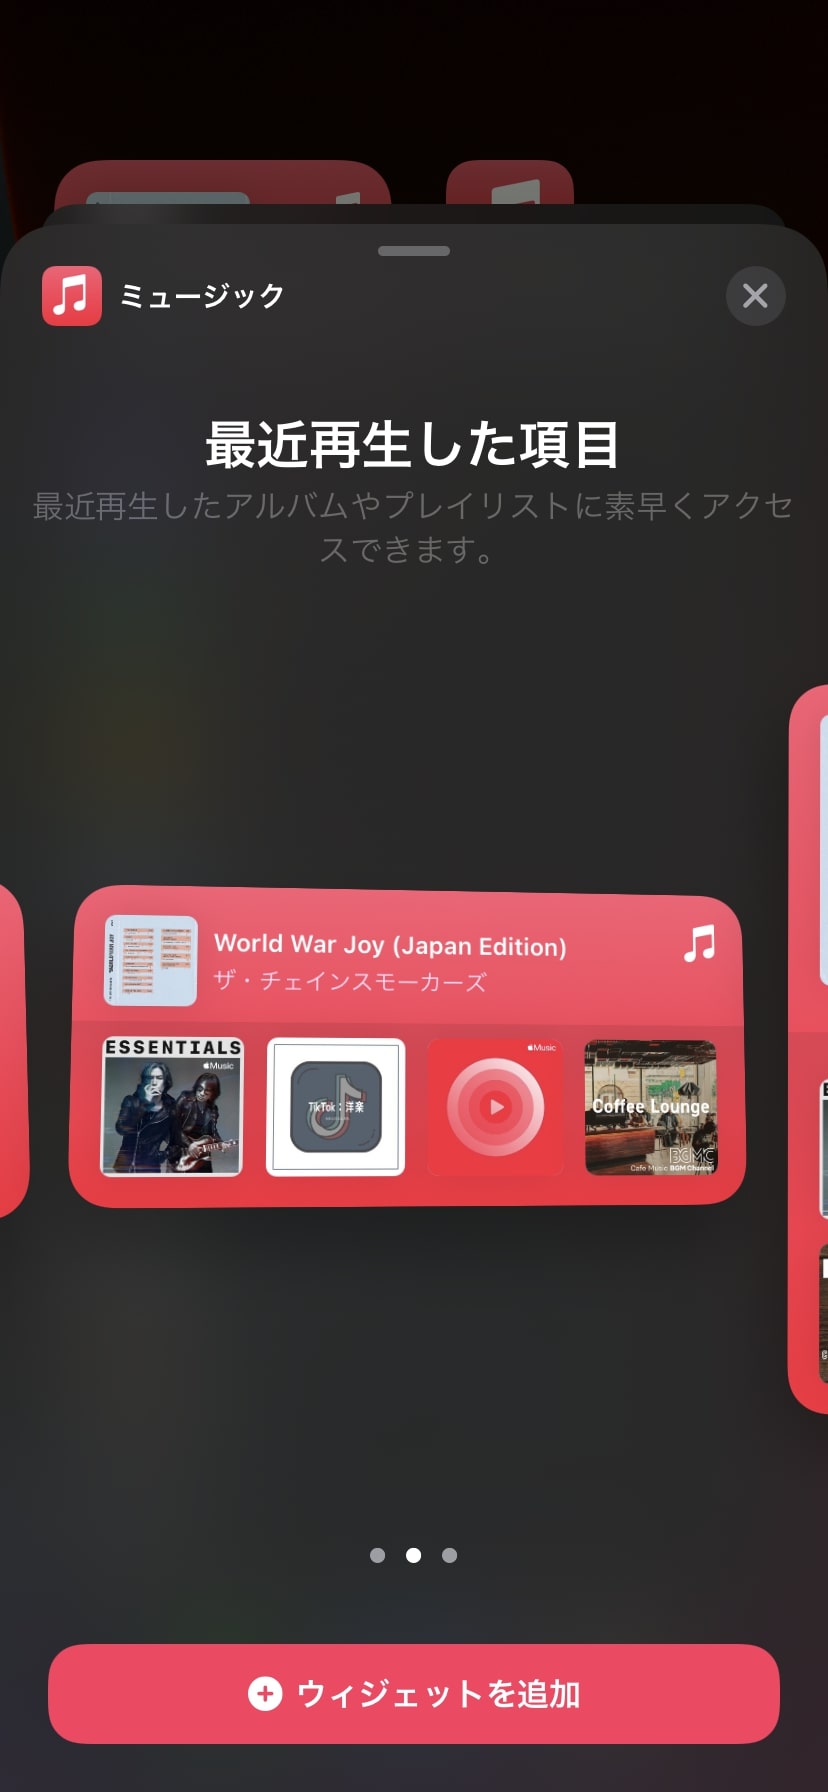 【iPhone版】Apple Musicウィジェット